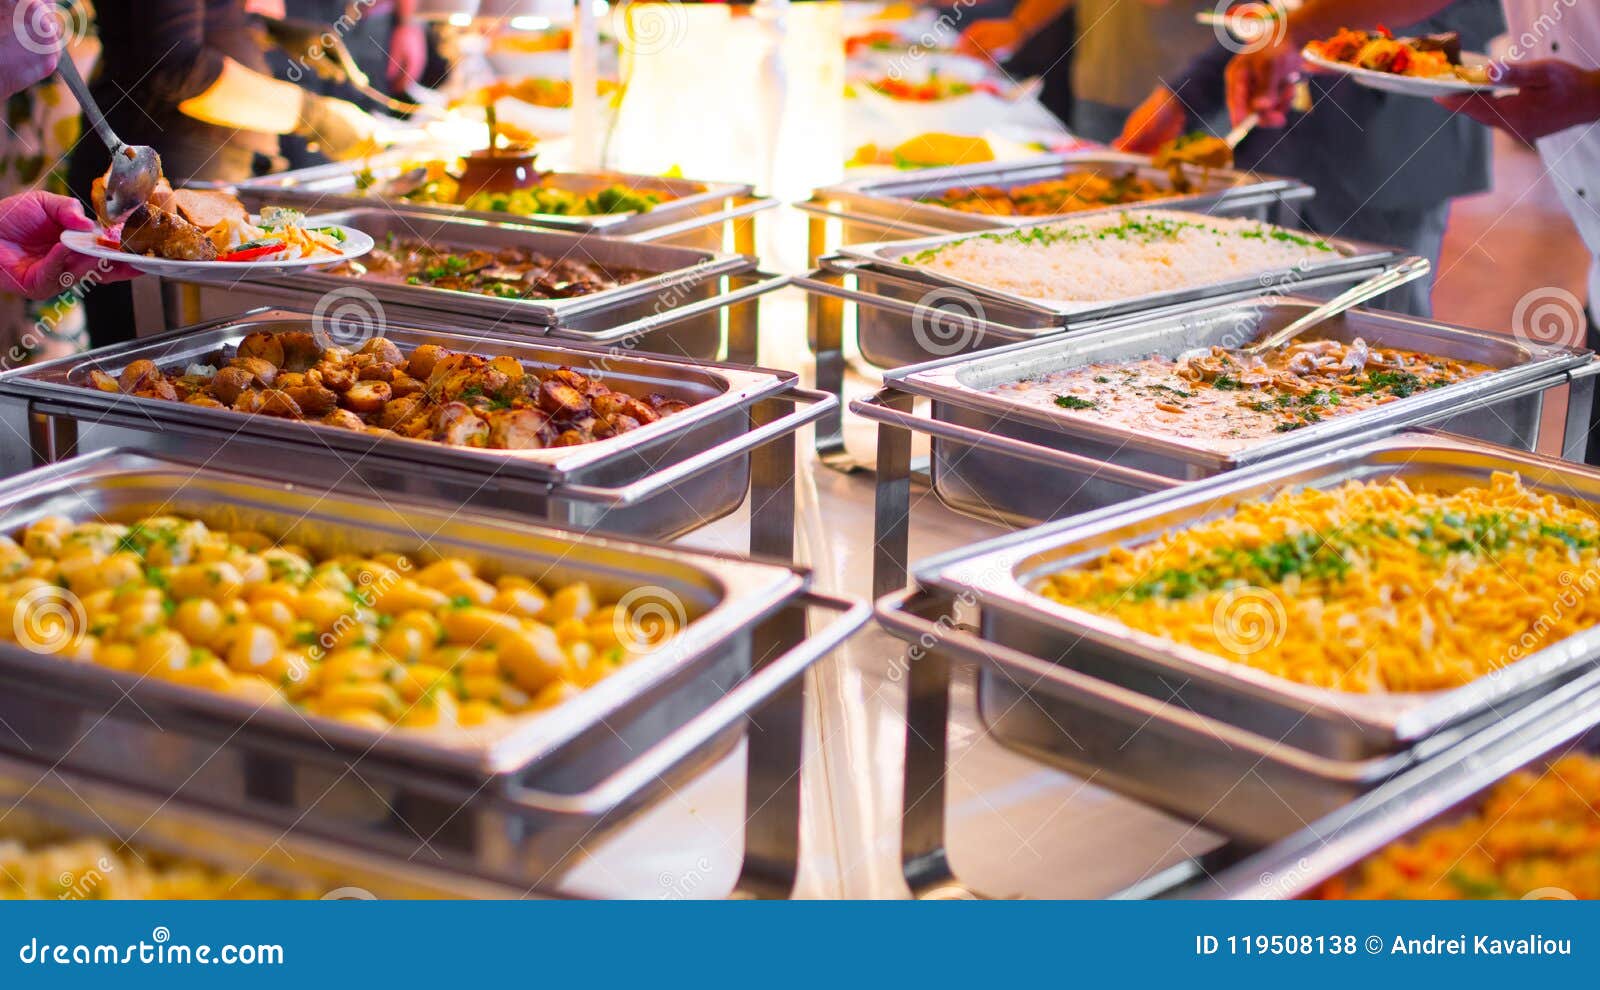 people group catering buffet food indoor in luxury restaurant